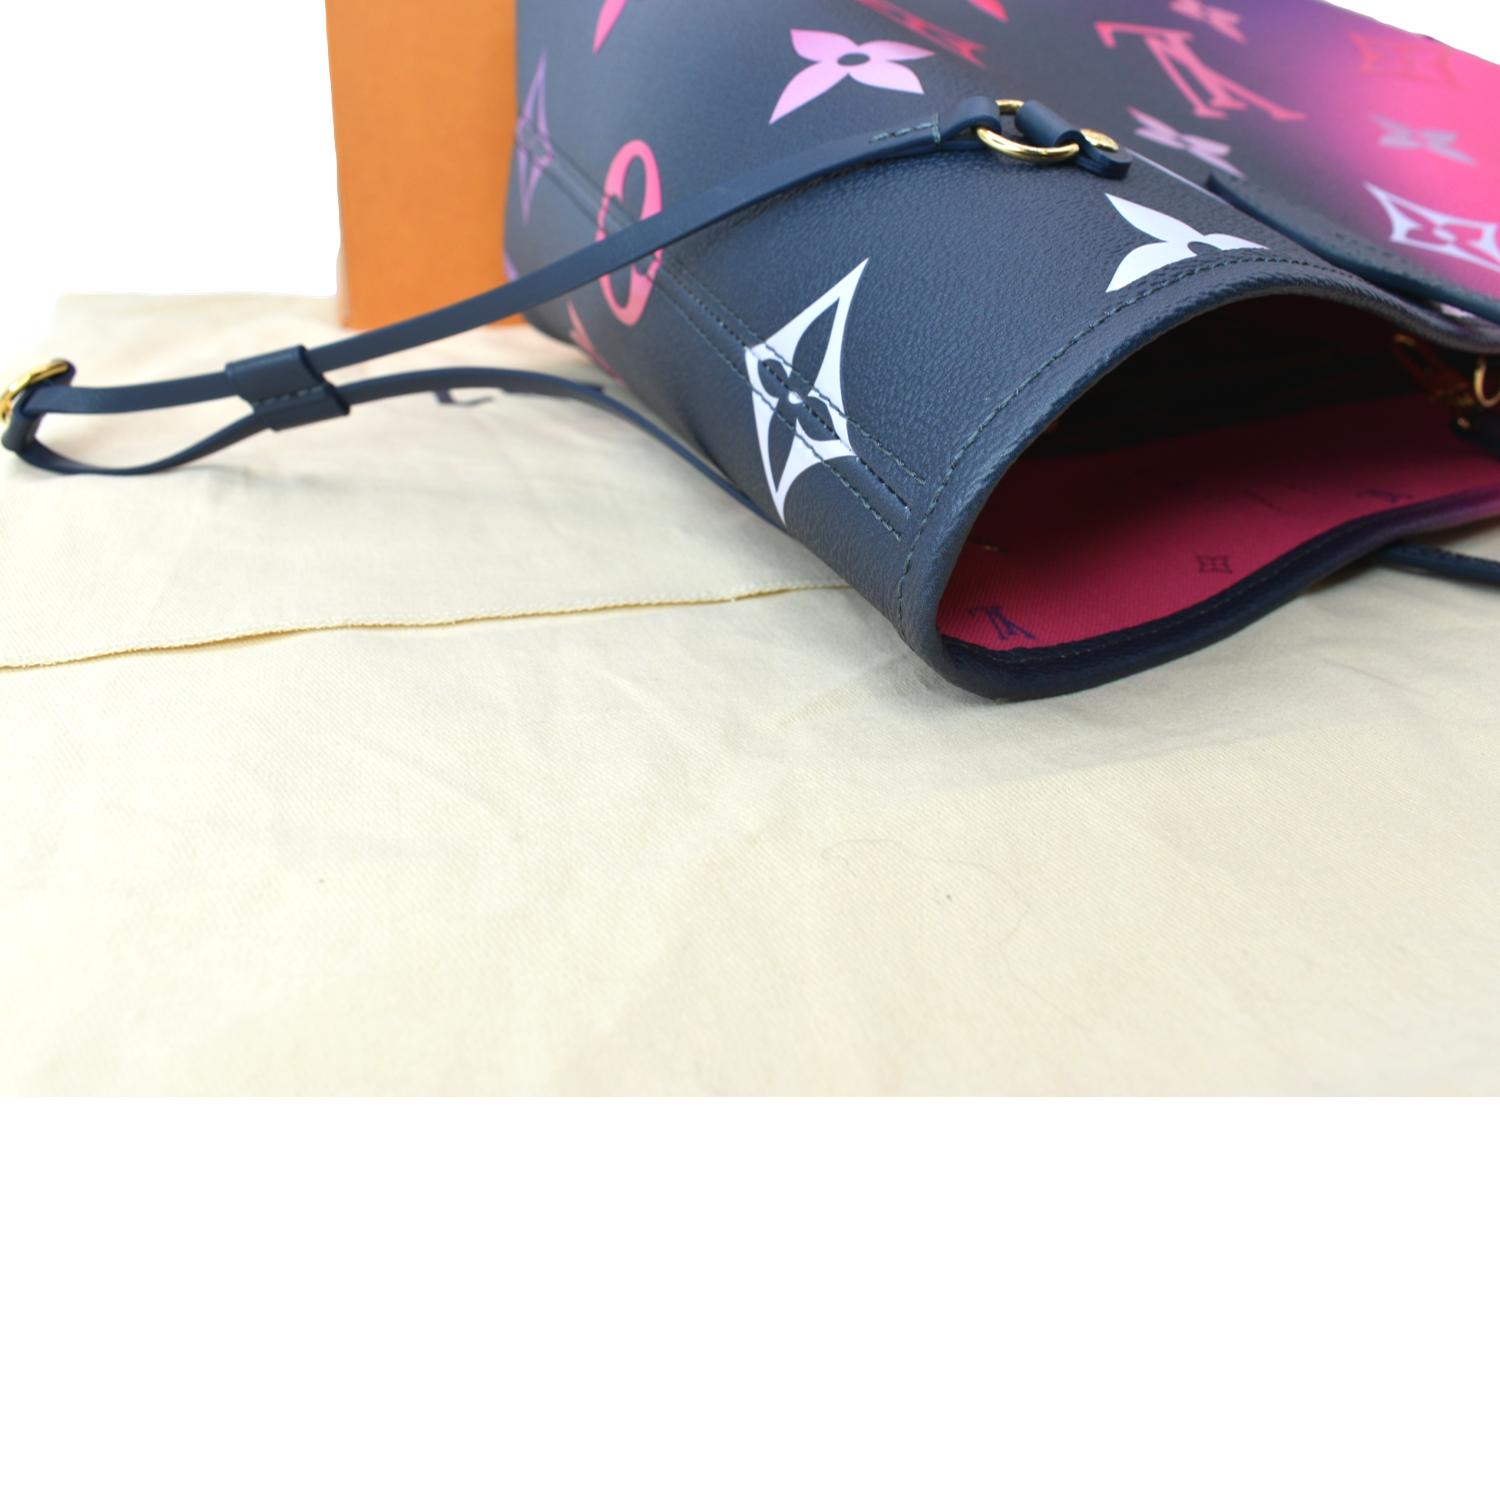 Replica Louis Vuitton NEVERFULL MM Bag LV MIDNIGHT FUCHSIA M20511 BLV1132  for Sale